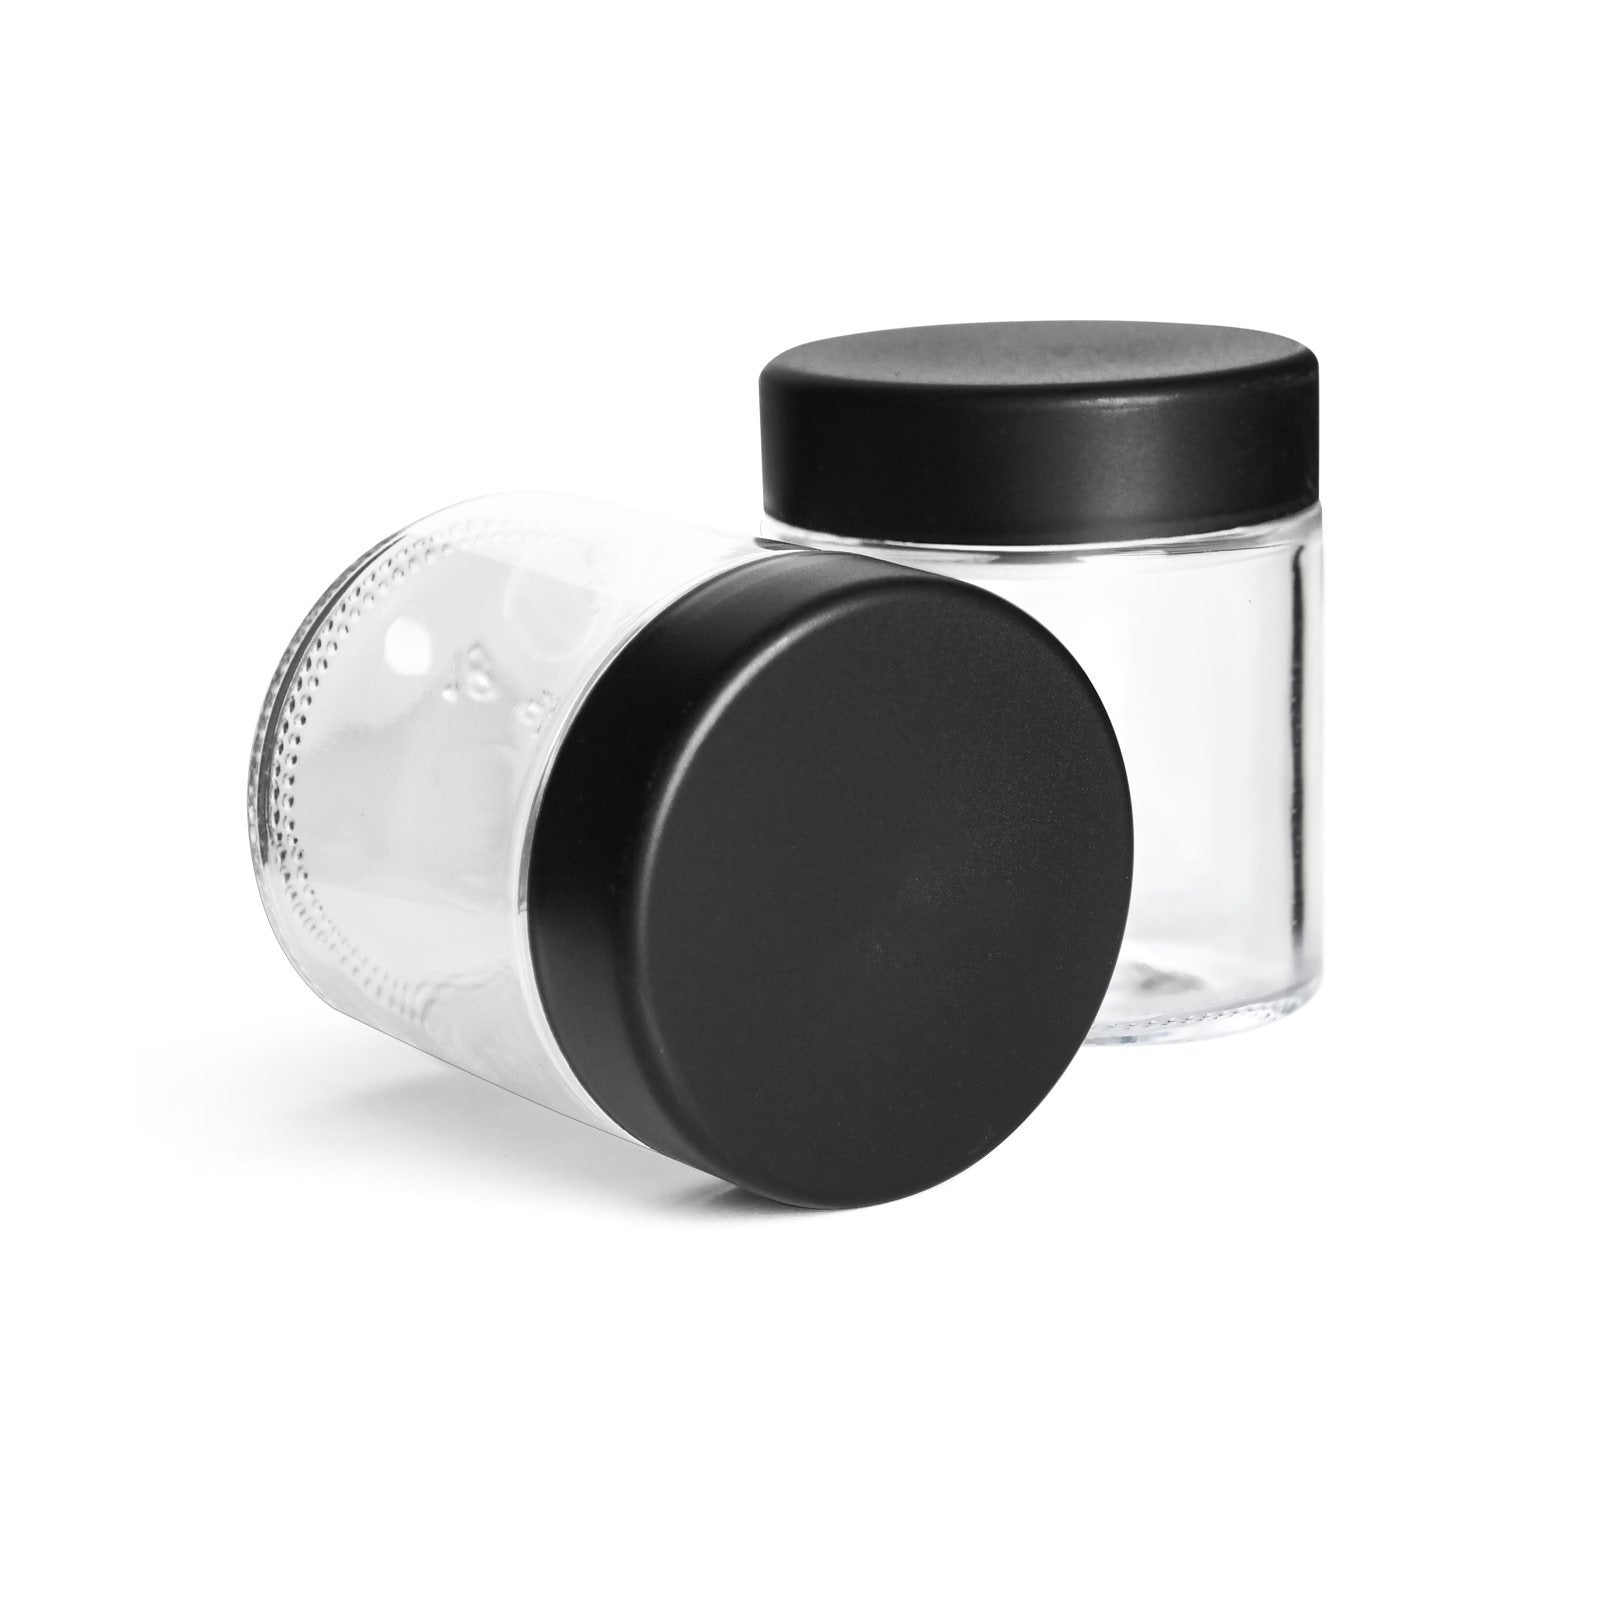 3oz Child Resistant Glass Jars With Black Caps - 5 Grams - 1 Count